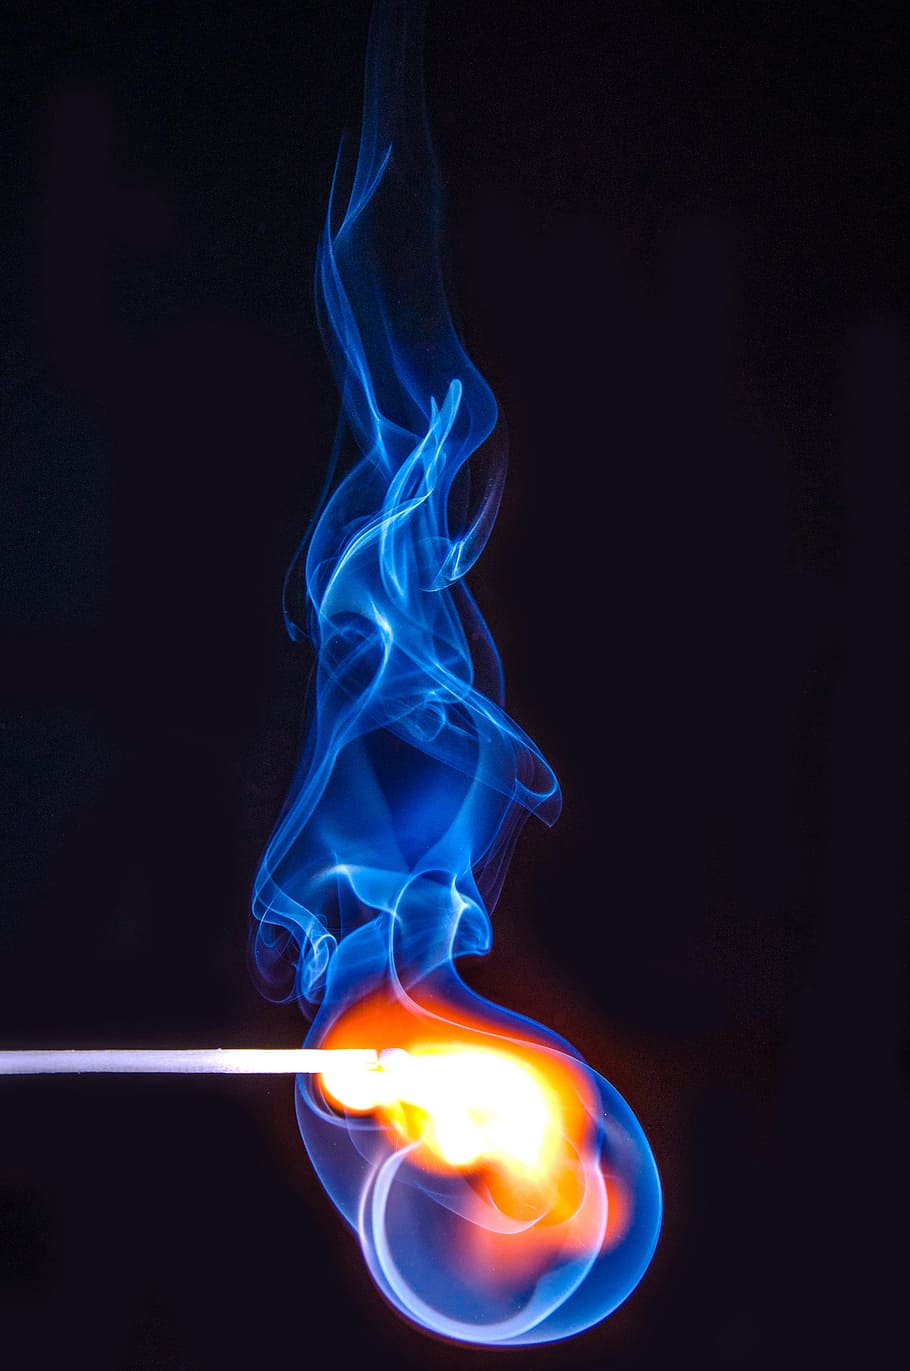 lighten stick match, match, burn, flame, hot, yellow, red, blue, smoke, ignite